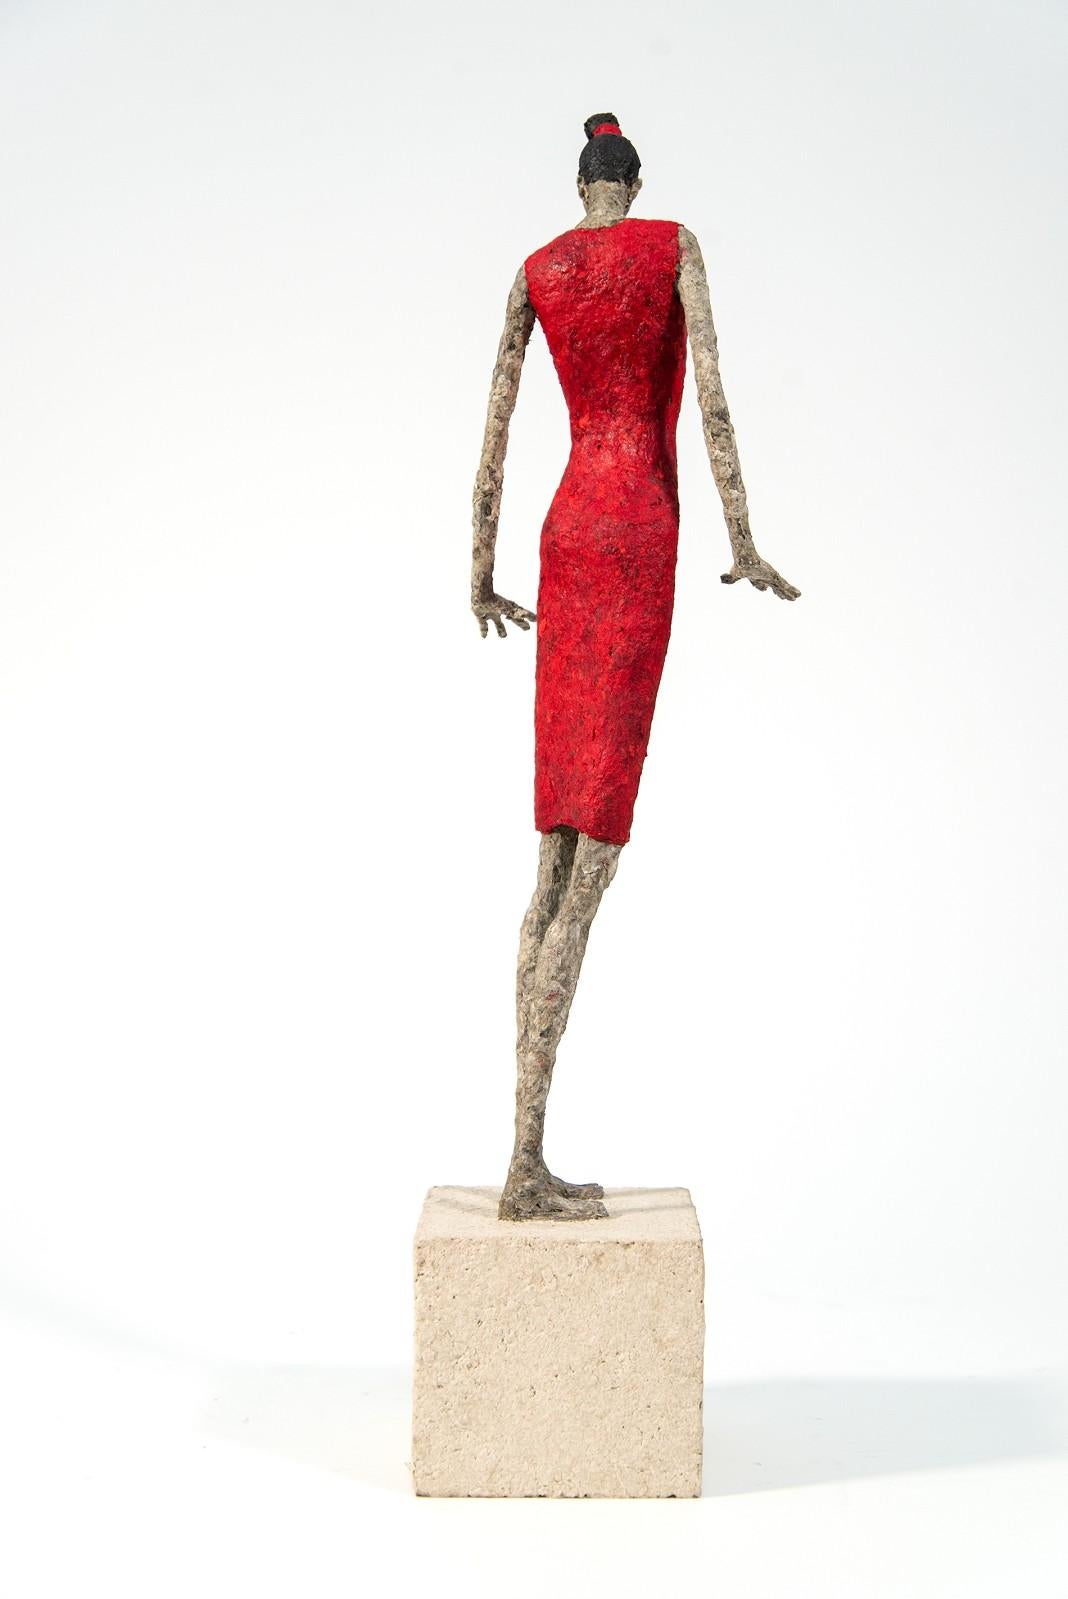 Francoise - expressive, textured, figurative, female, paper mache sculpture - Gray Figurative Sculpture by Paul Duval